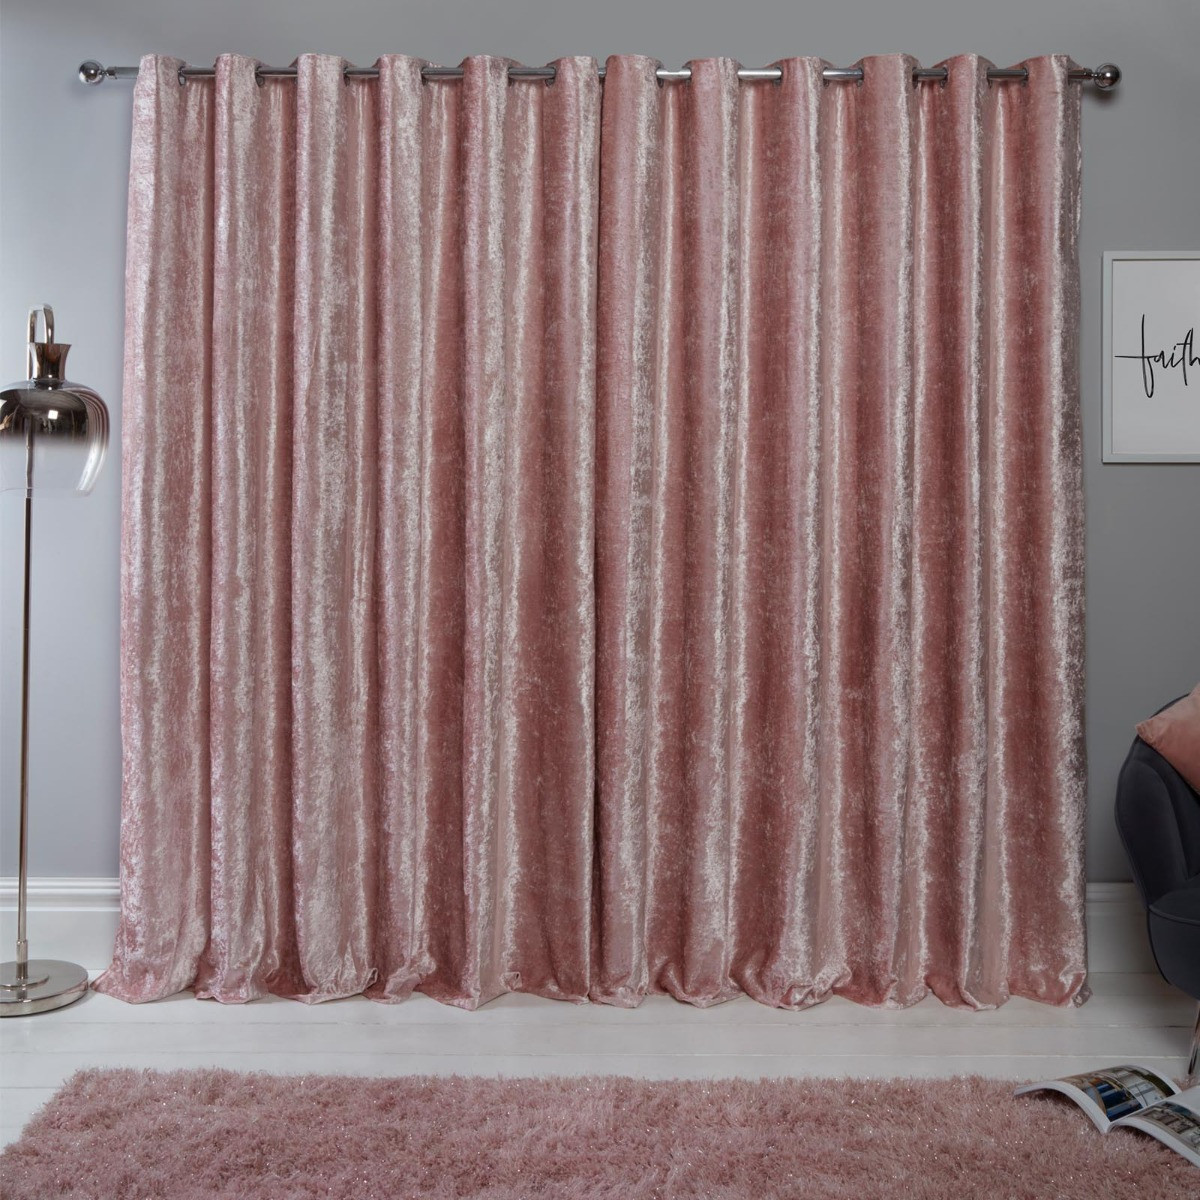 Sienna Home Crushed Velvet Eyelet Curtains, Blush Pink - 66" x 54">